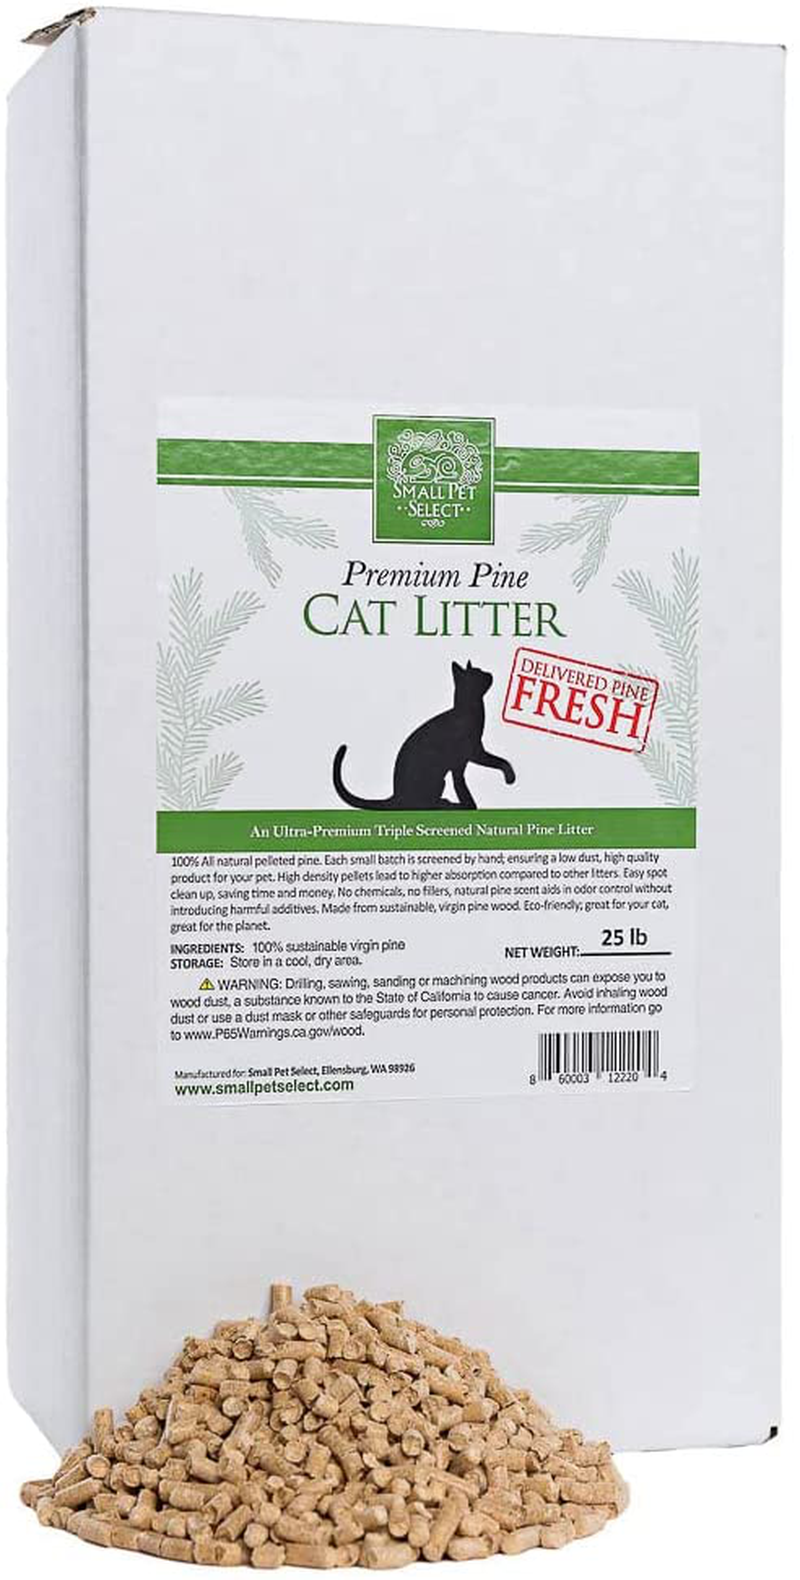 Small Pet Select - Premium Pine Pelleted Cat Litter 25Lb